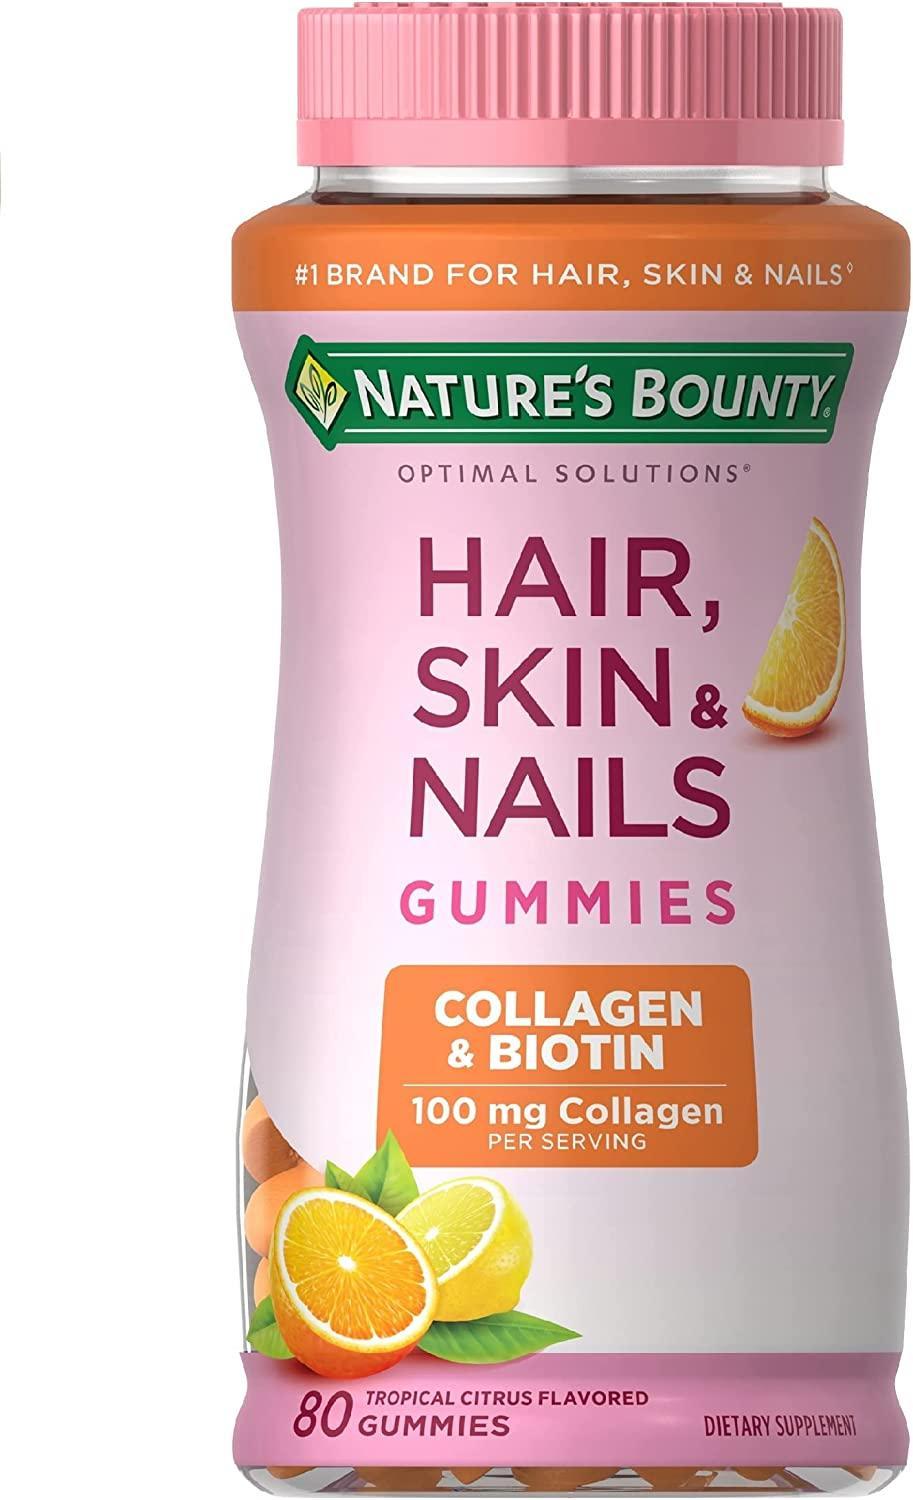 Nature's Bounty gummies